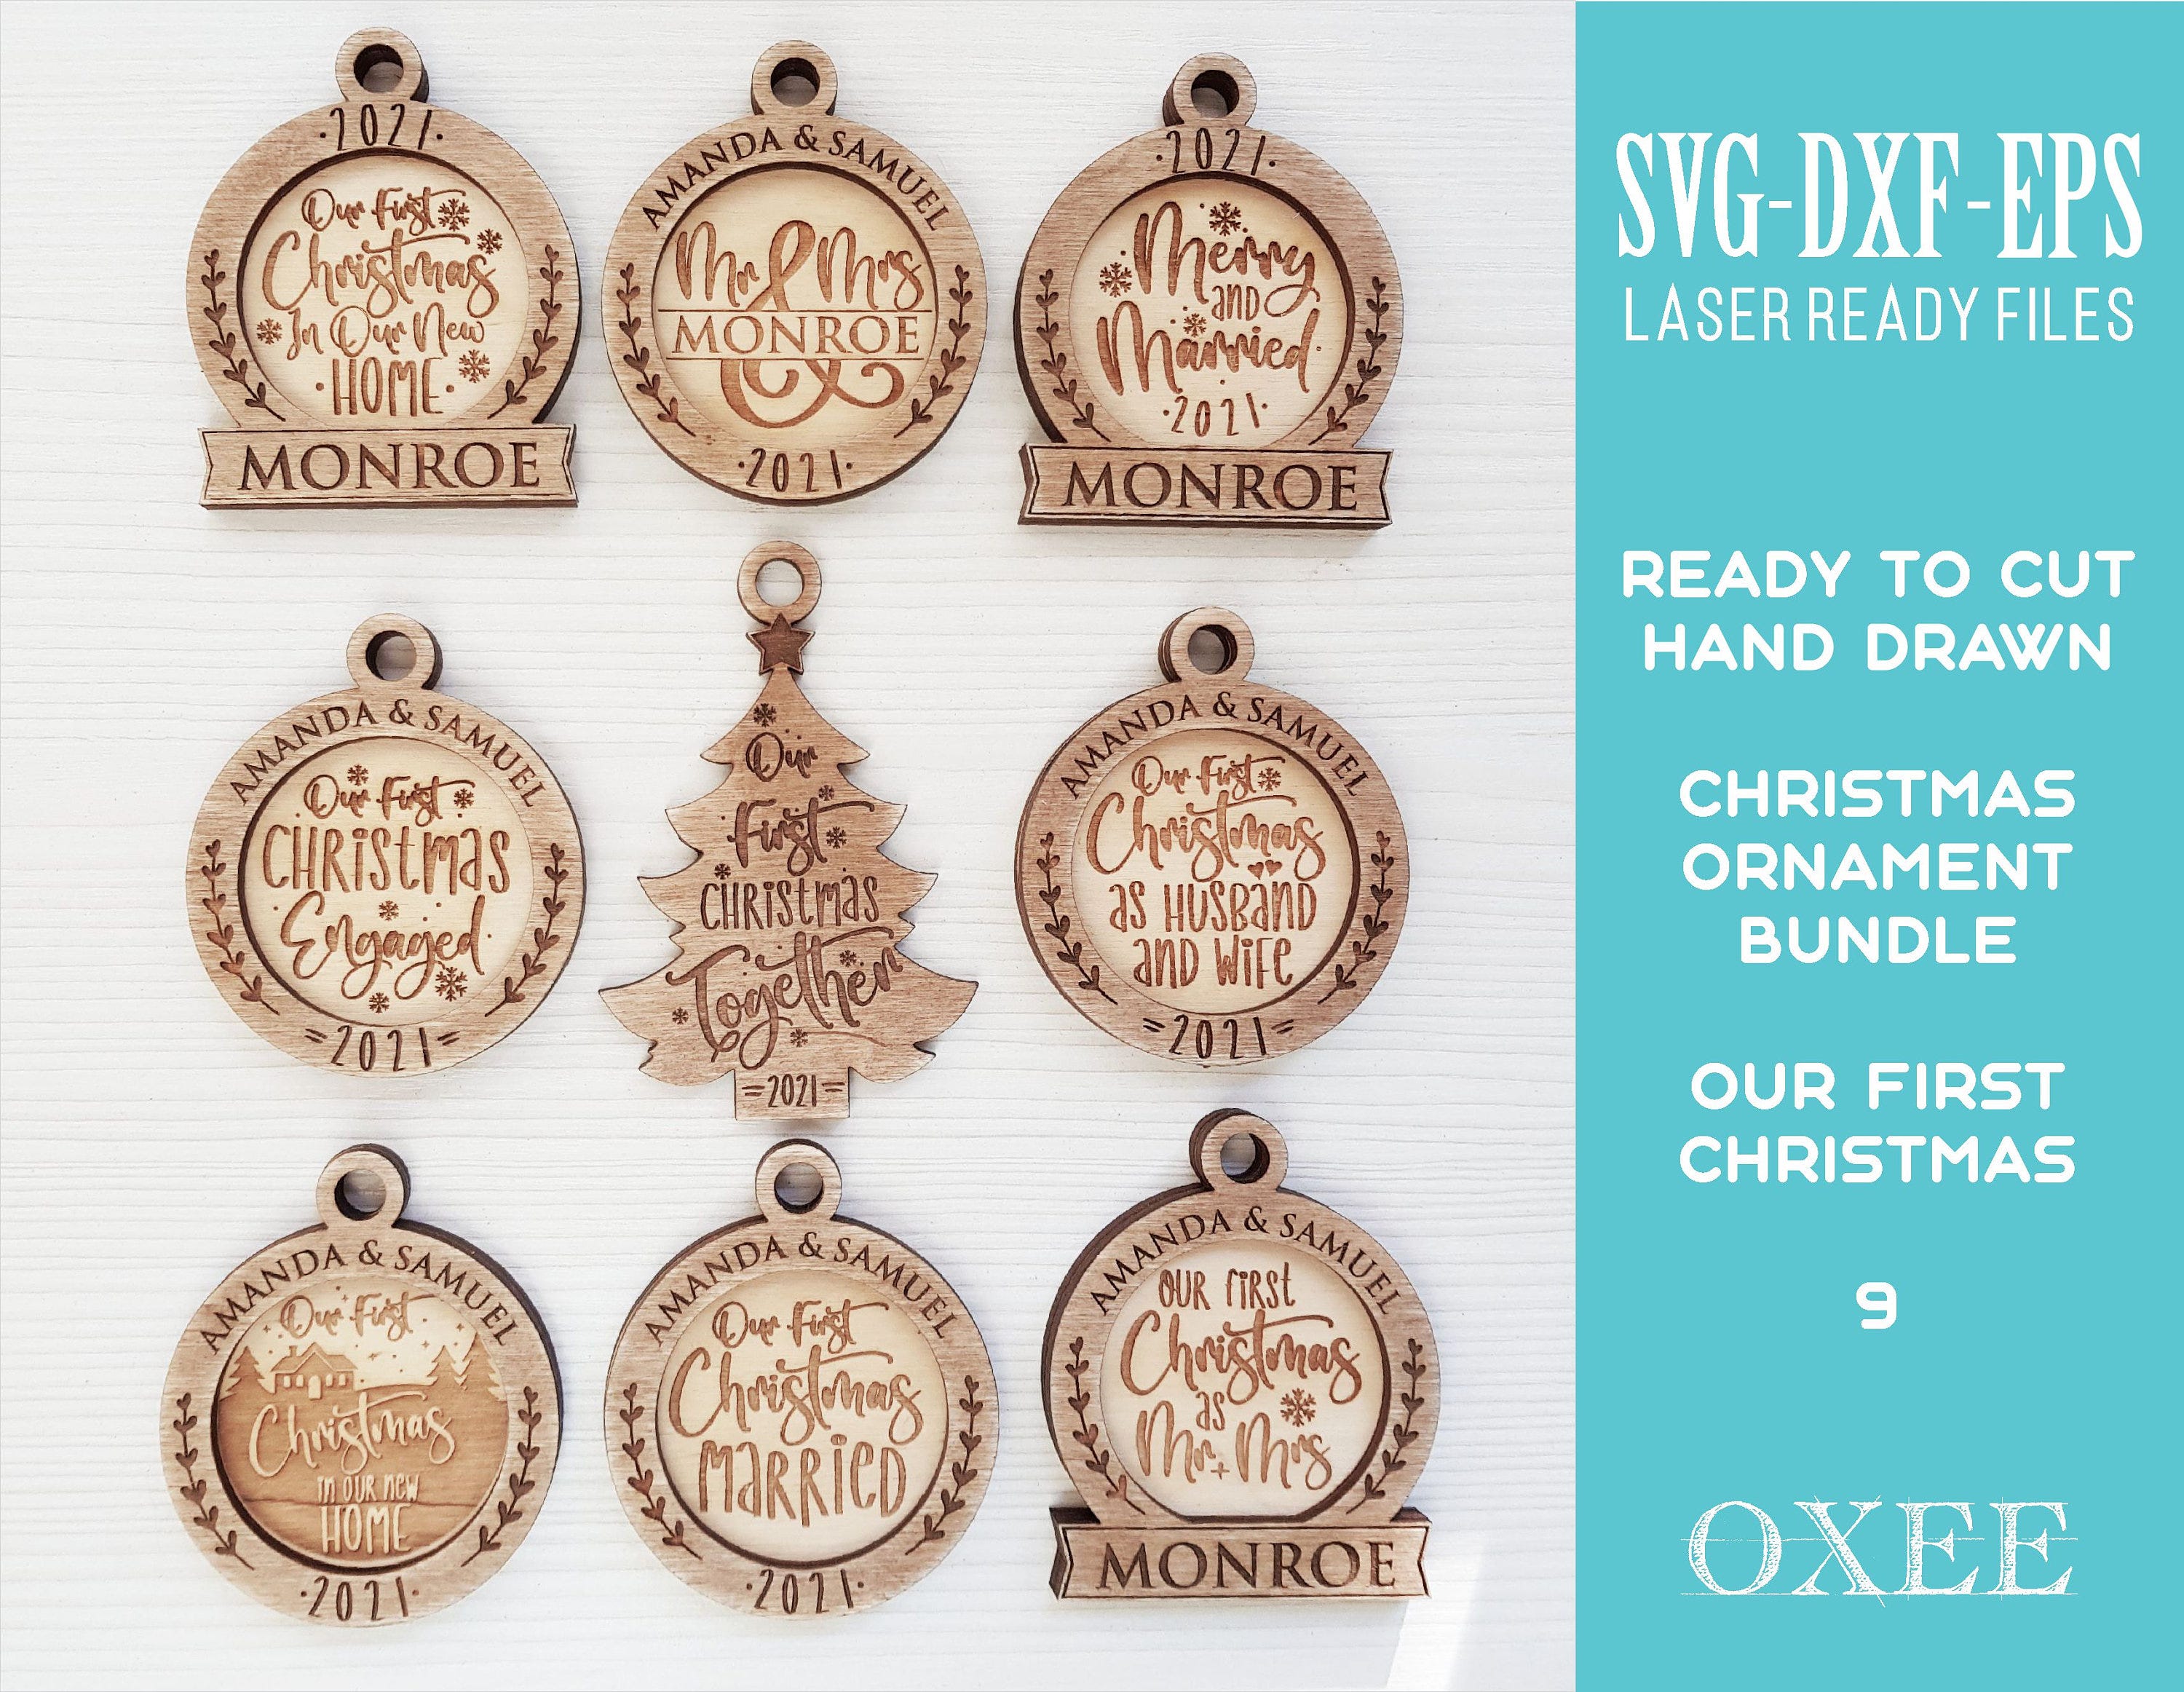 Our First Christmas ornament SVG bundle by Oxee, Christmas tree ornament svg, Mr and Mrs ornament svg bundle, Glowforge svg, Laser cut file